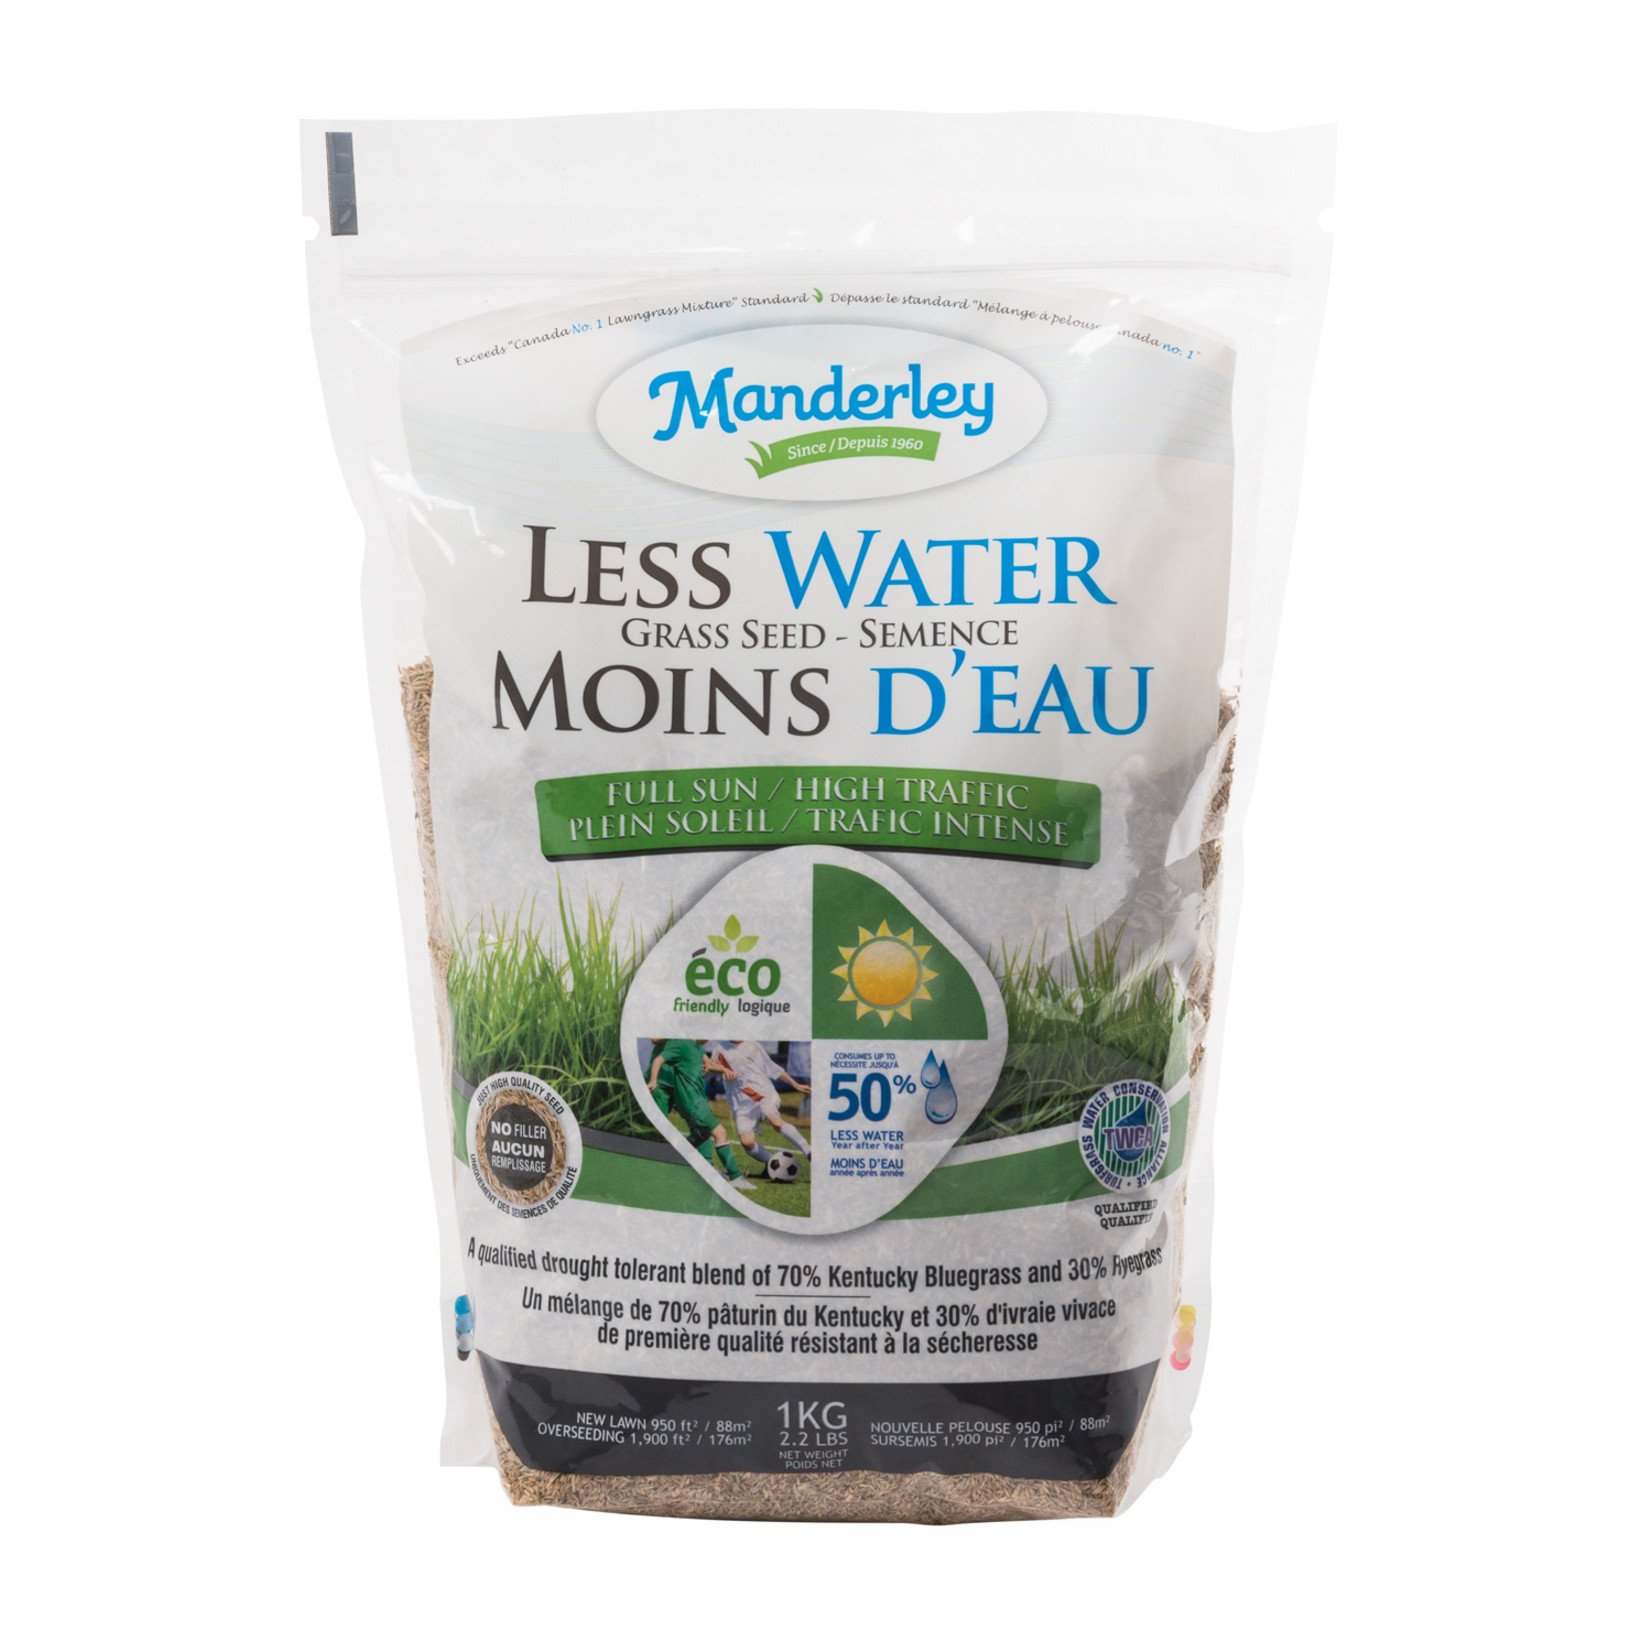 Manderley Draught Resistant Kentucky Grass Seed (1kg)